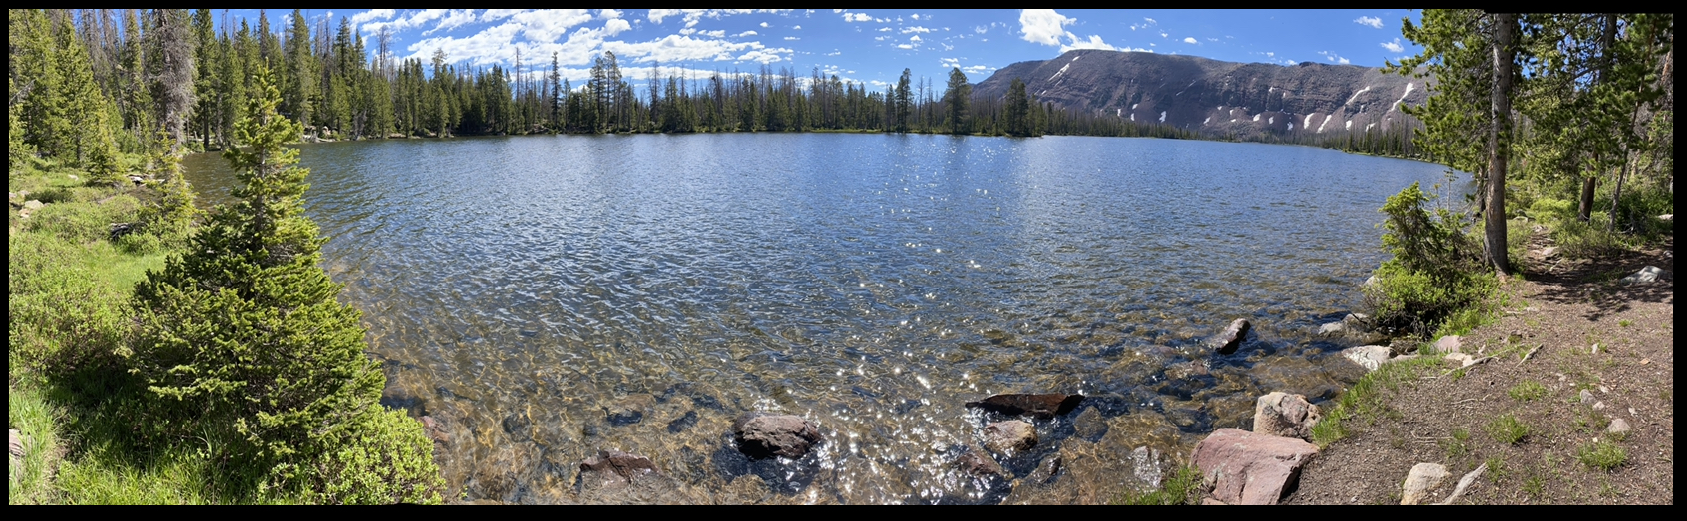 Photo of Grandaddy lake in the High Uintahs